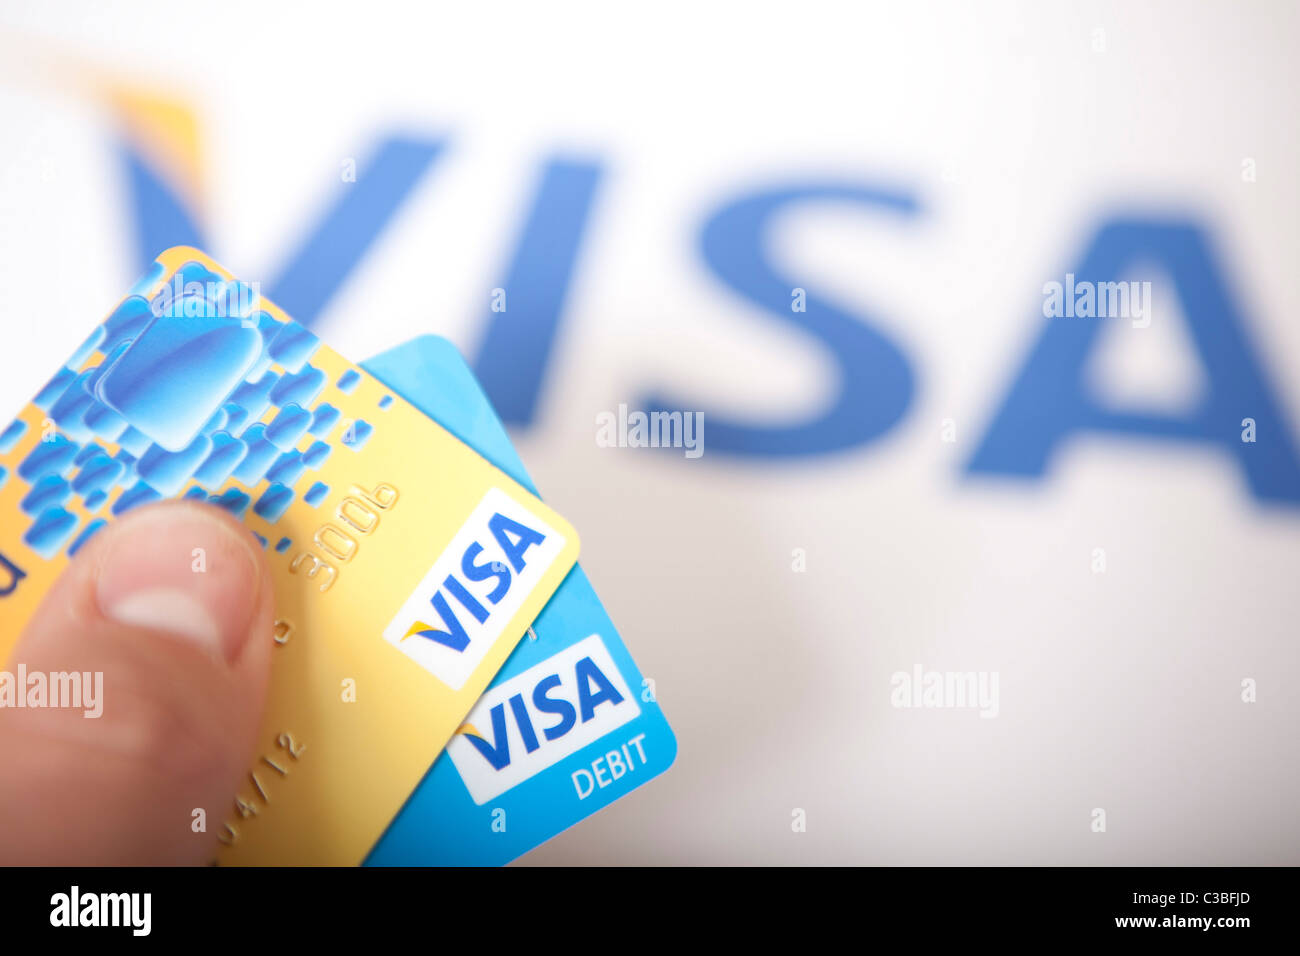 Visa debit card. Stock Photo